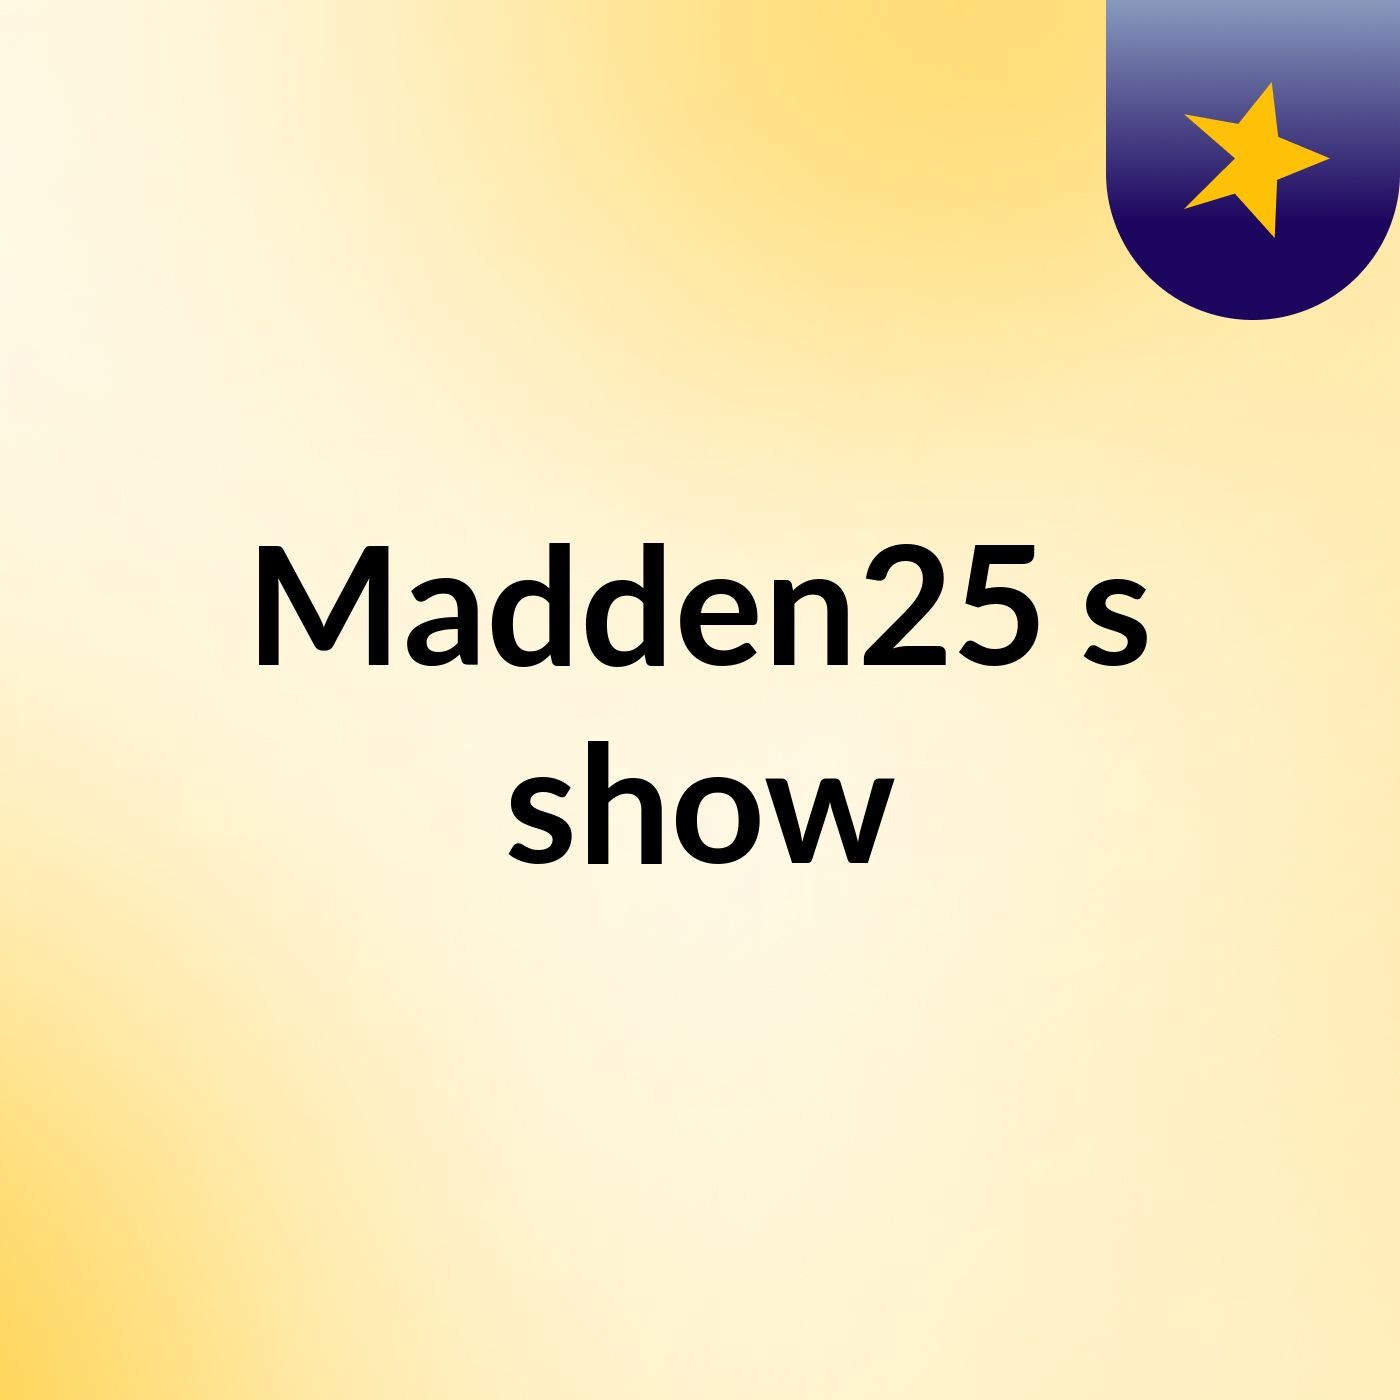 Madden25's show